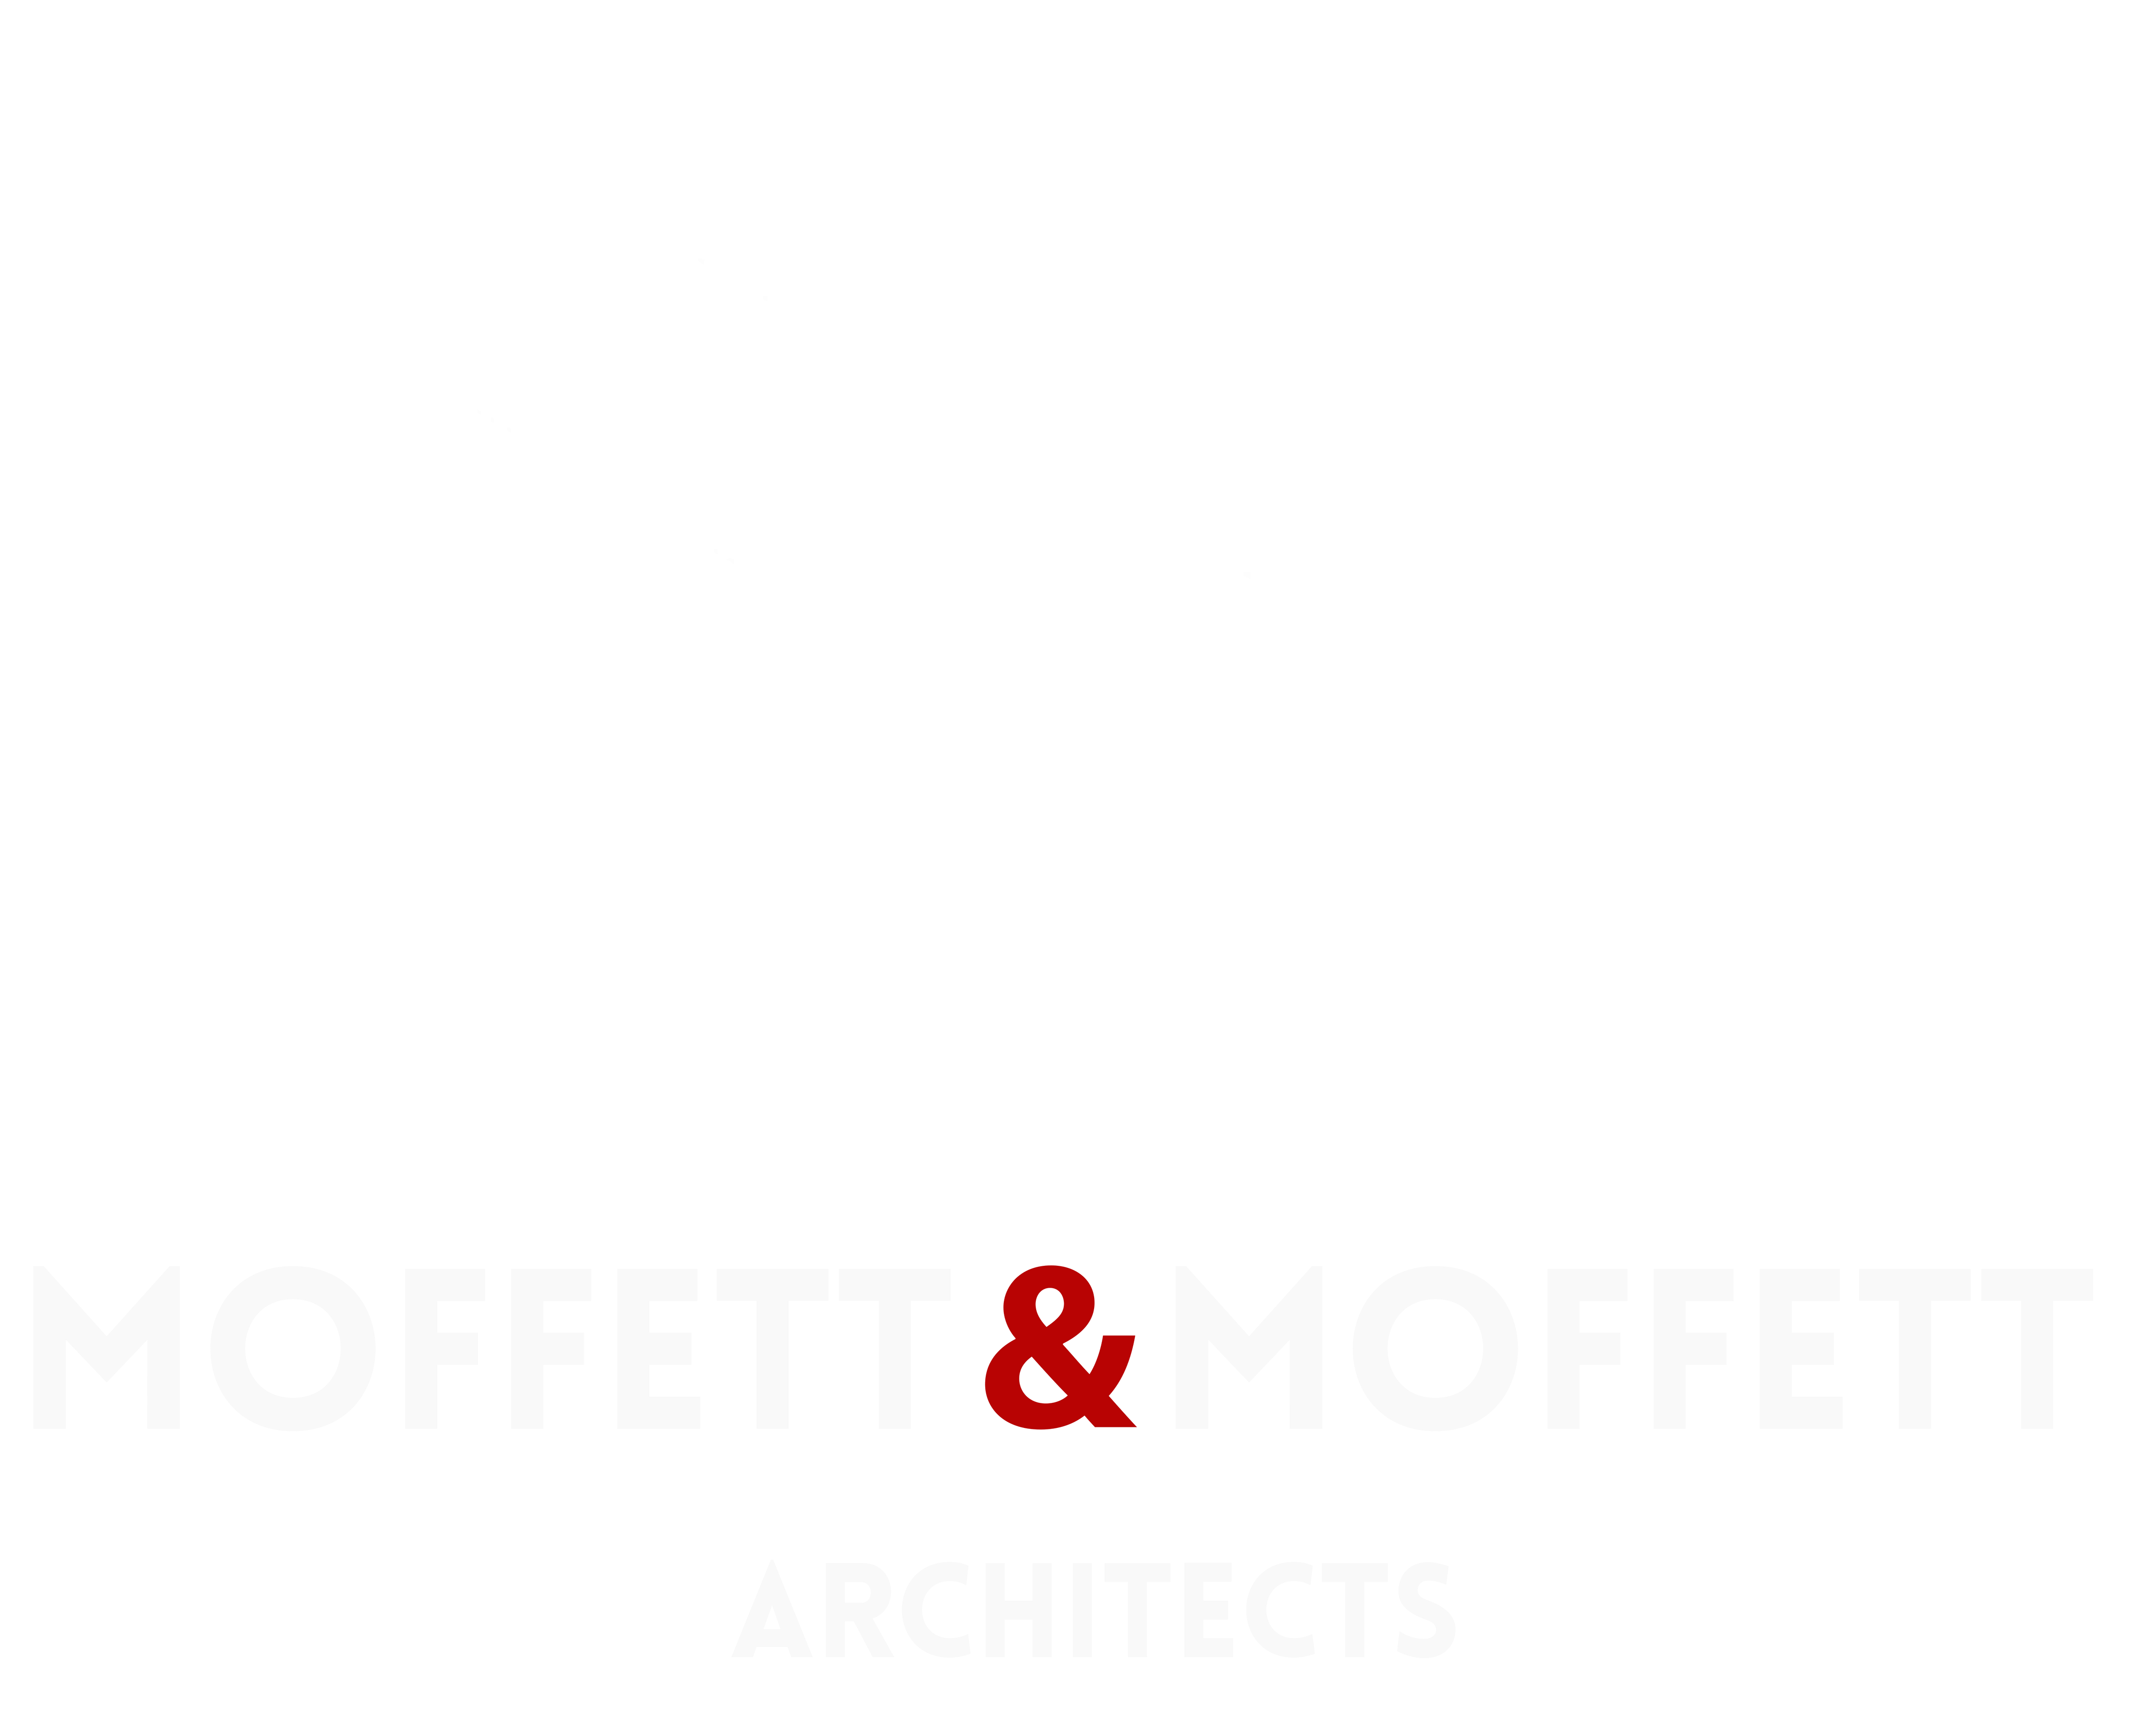 Moffett & Moffett Architects